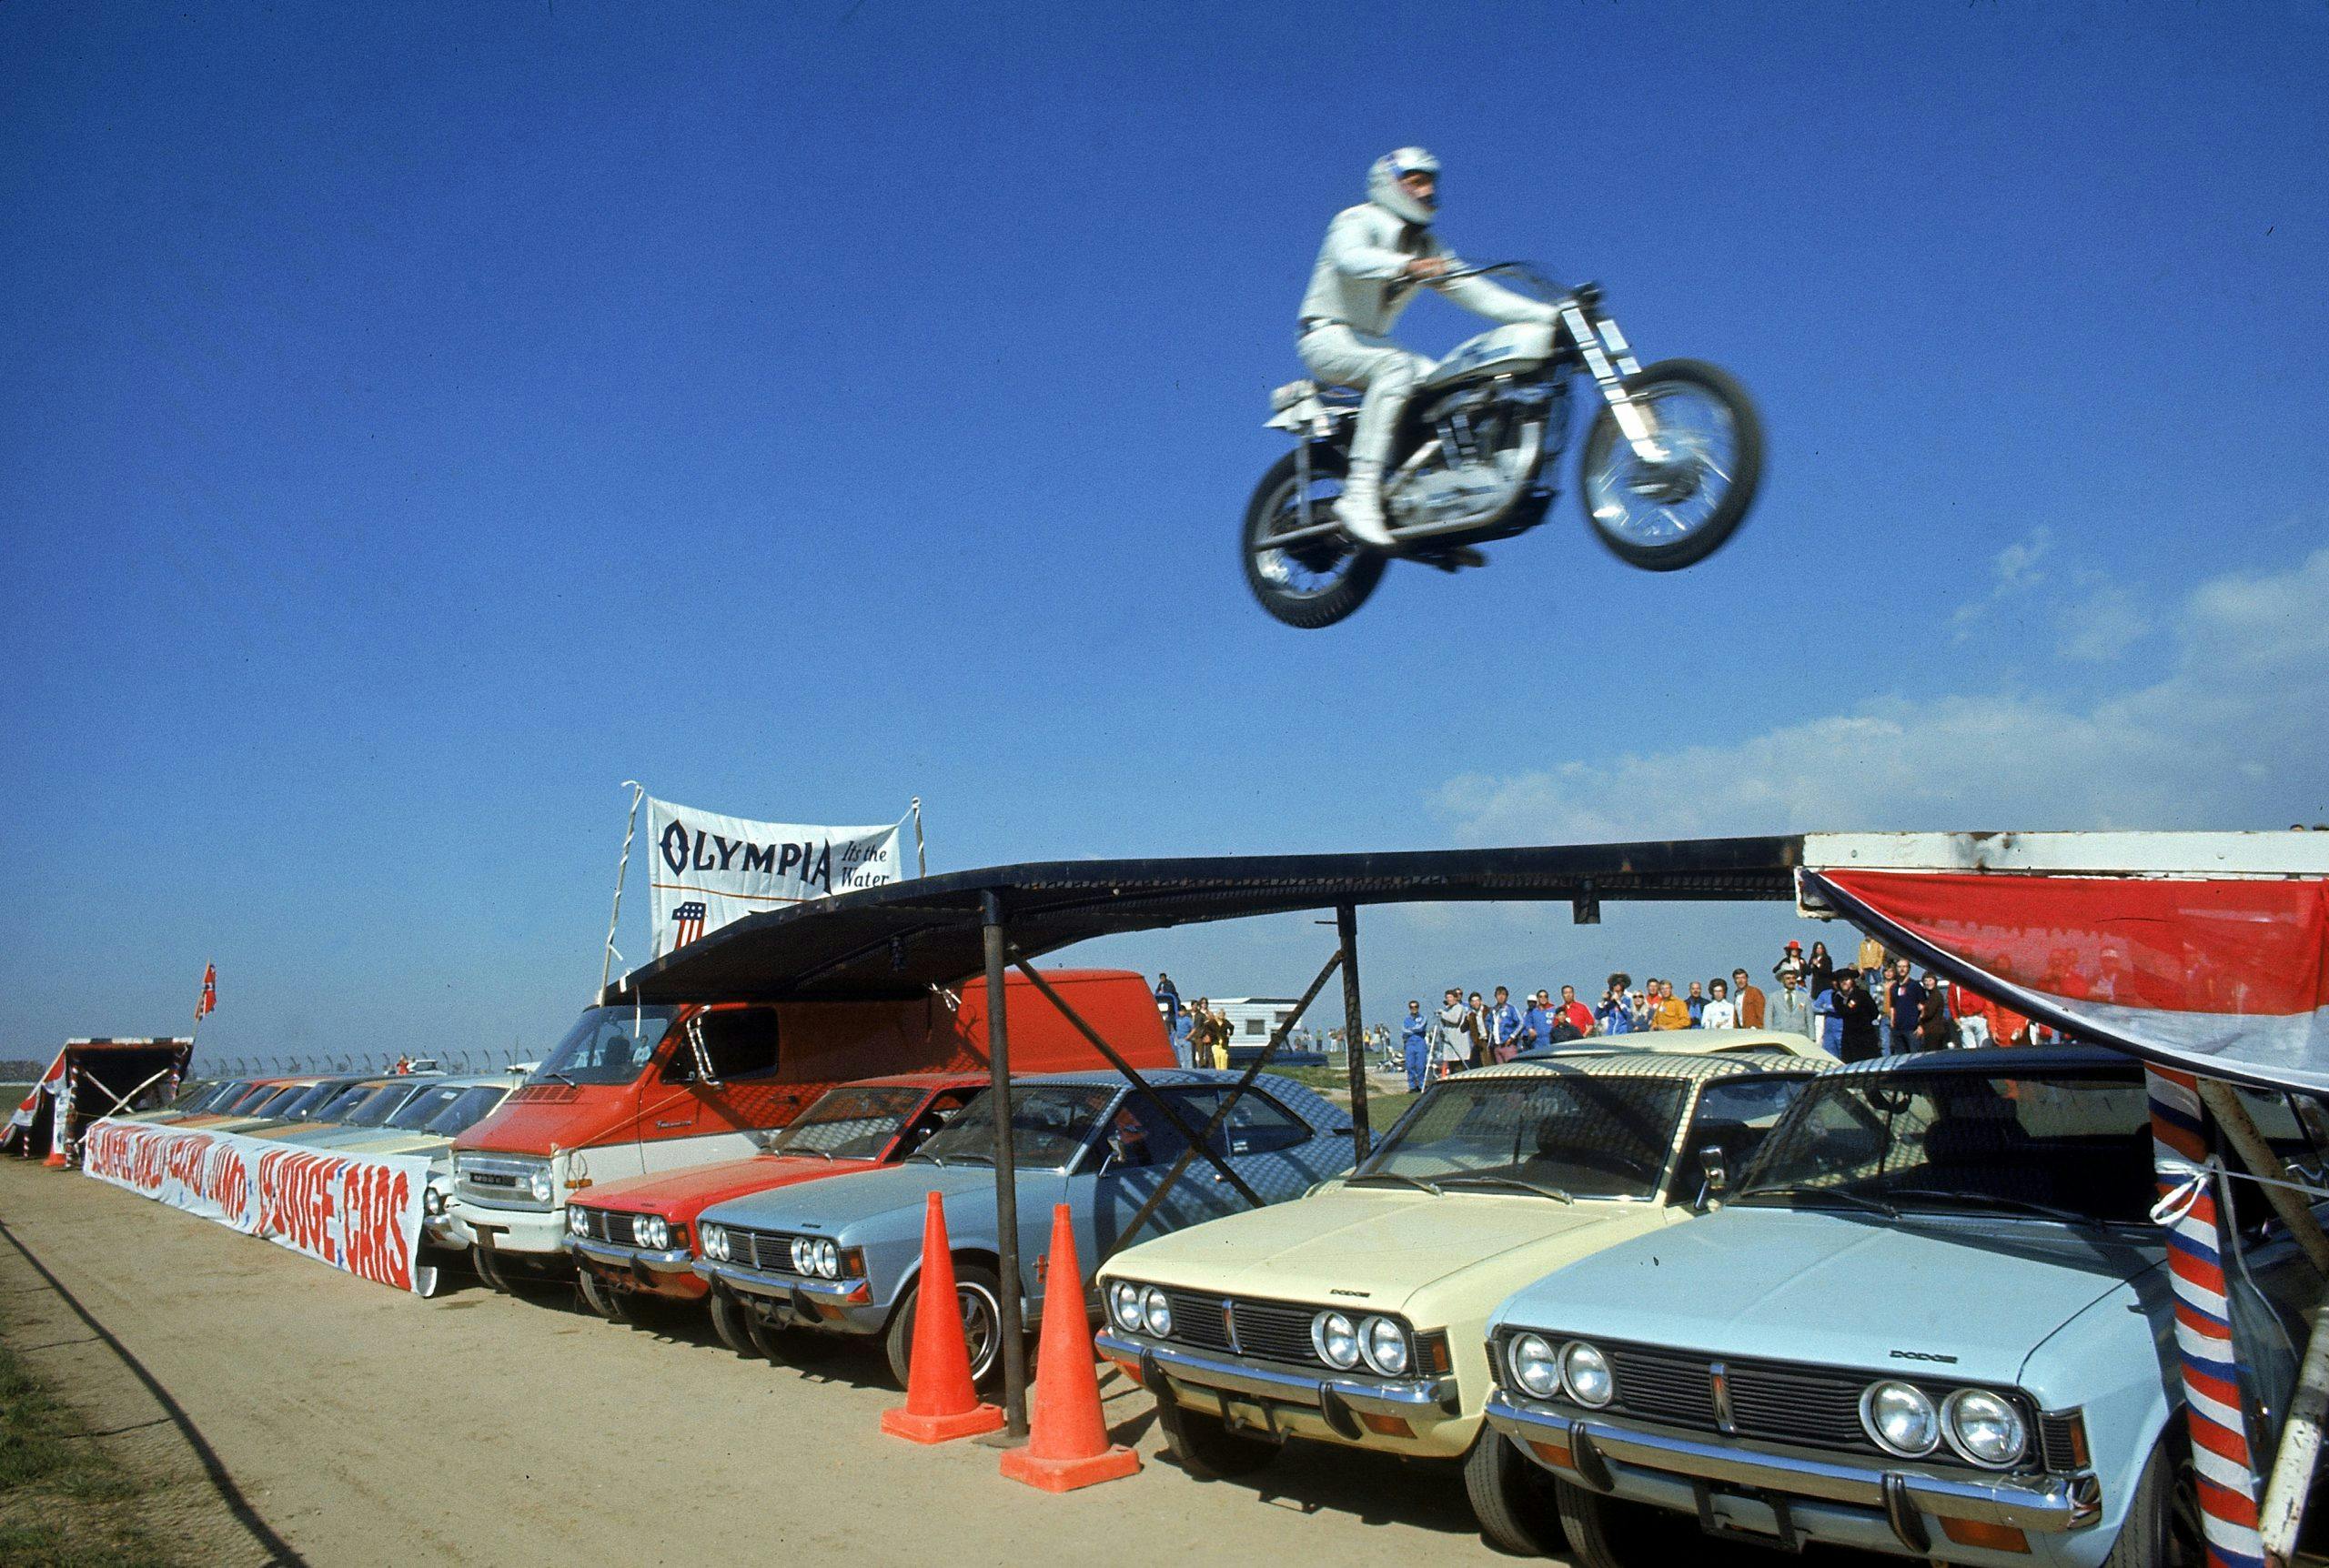 Evel Knievel In Flight